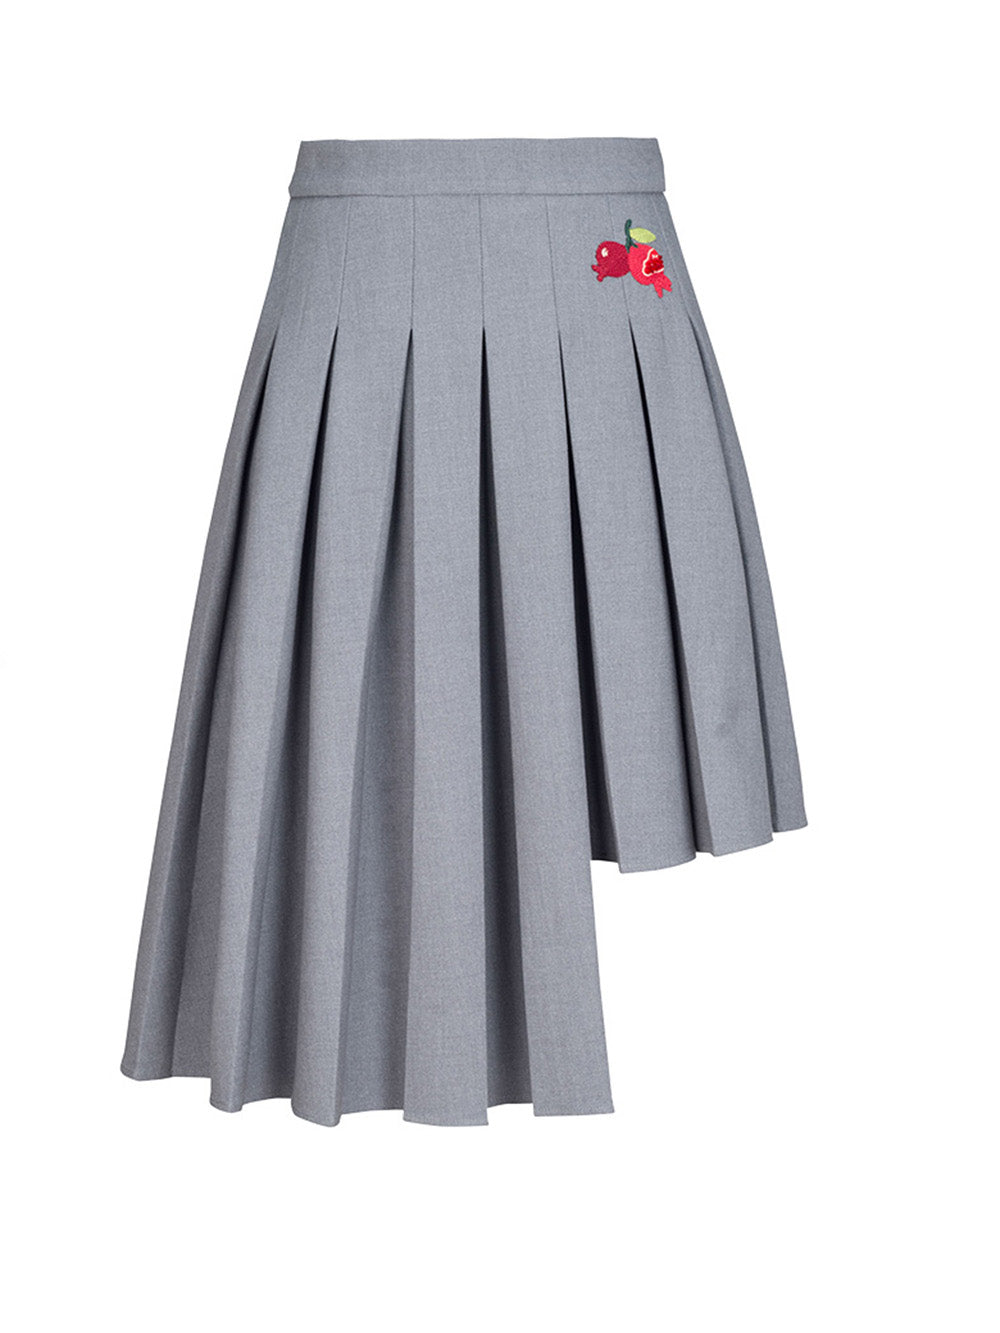 MUKZIN Irregular Embroidery Pleated High Low Gray Skirt